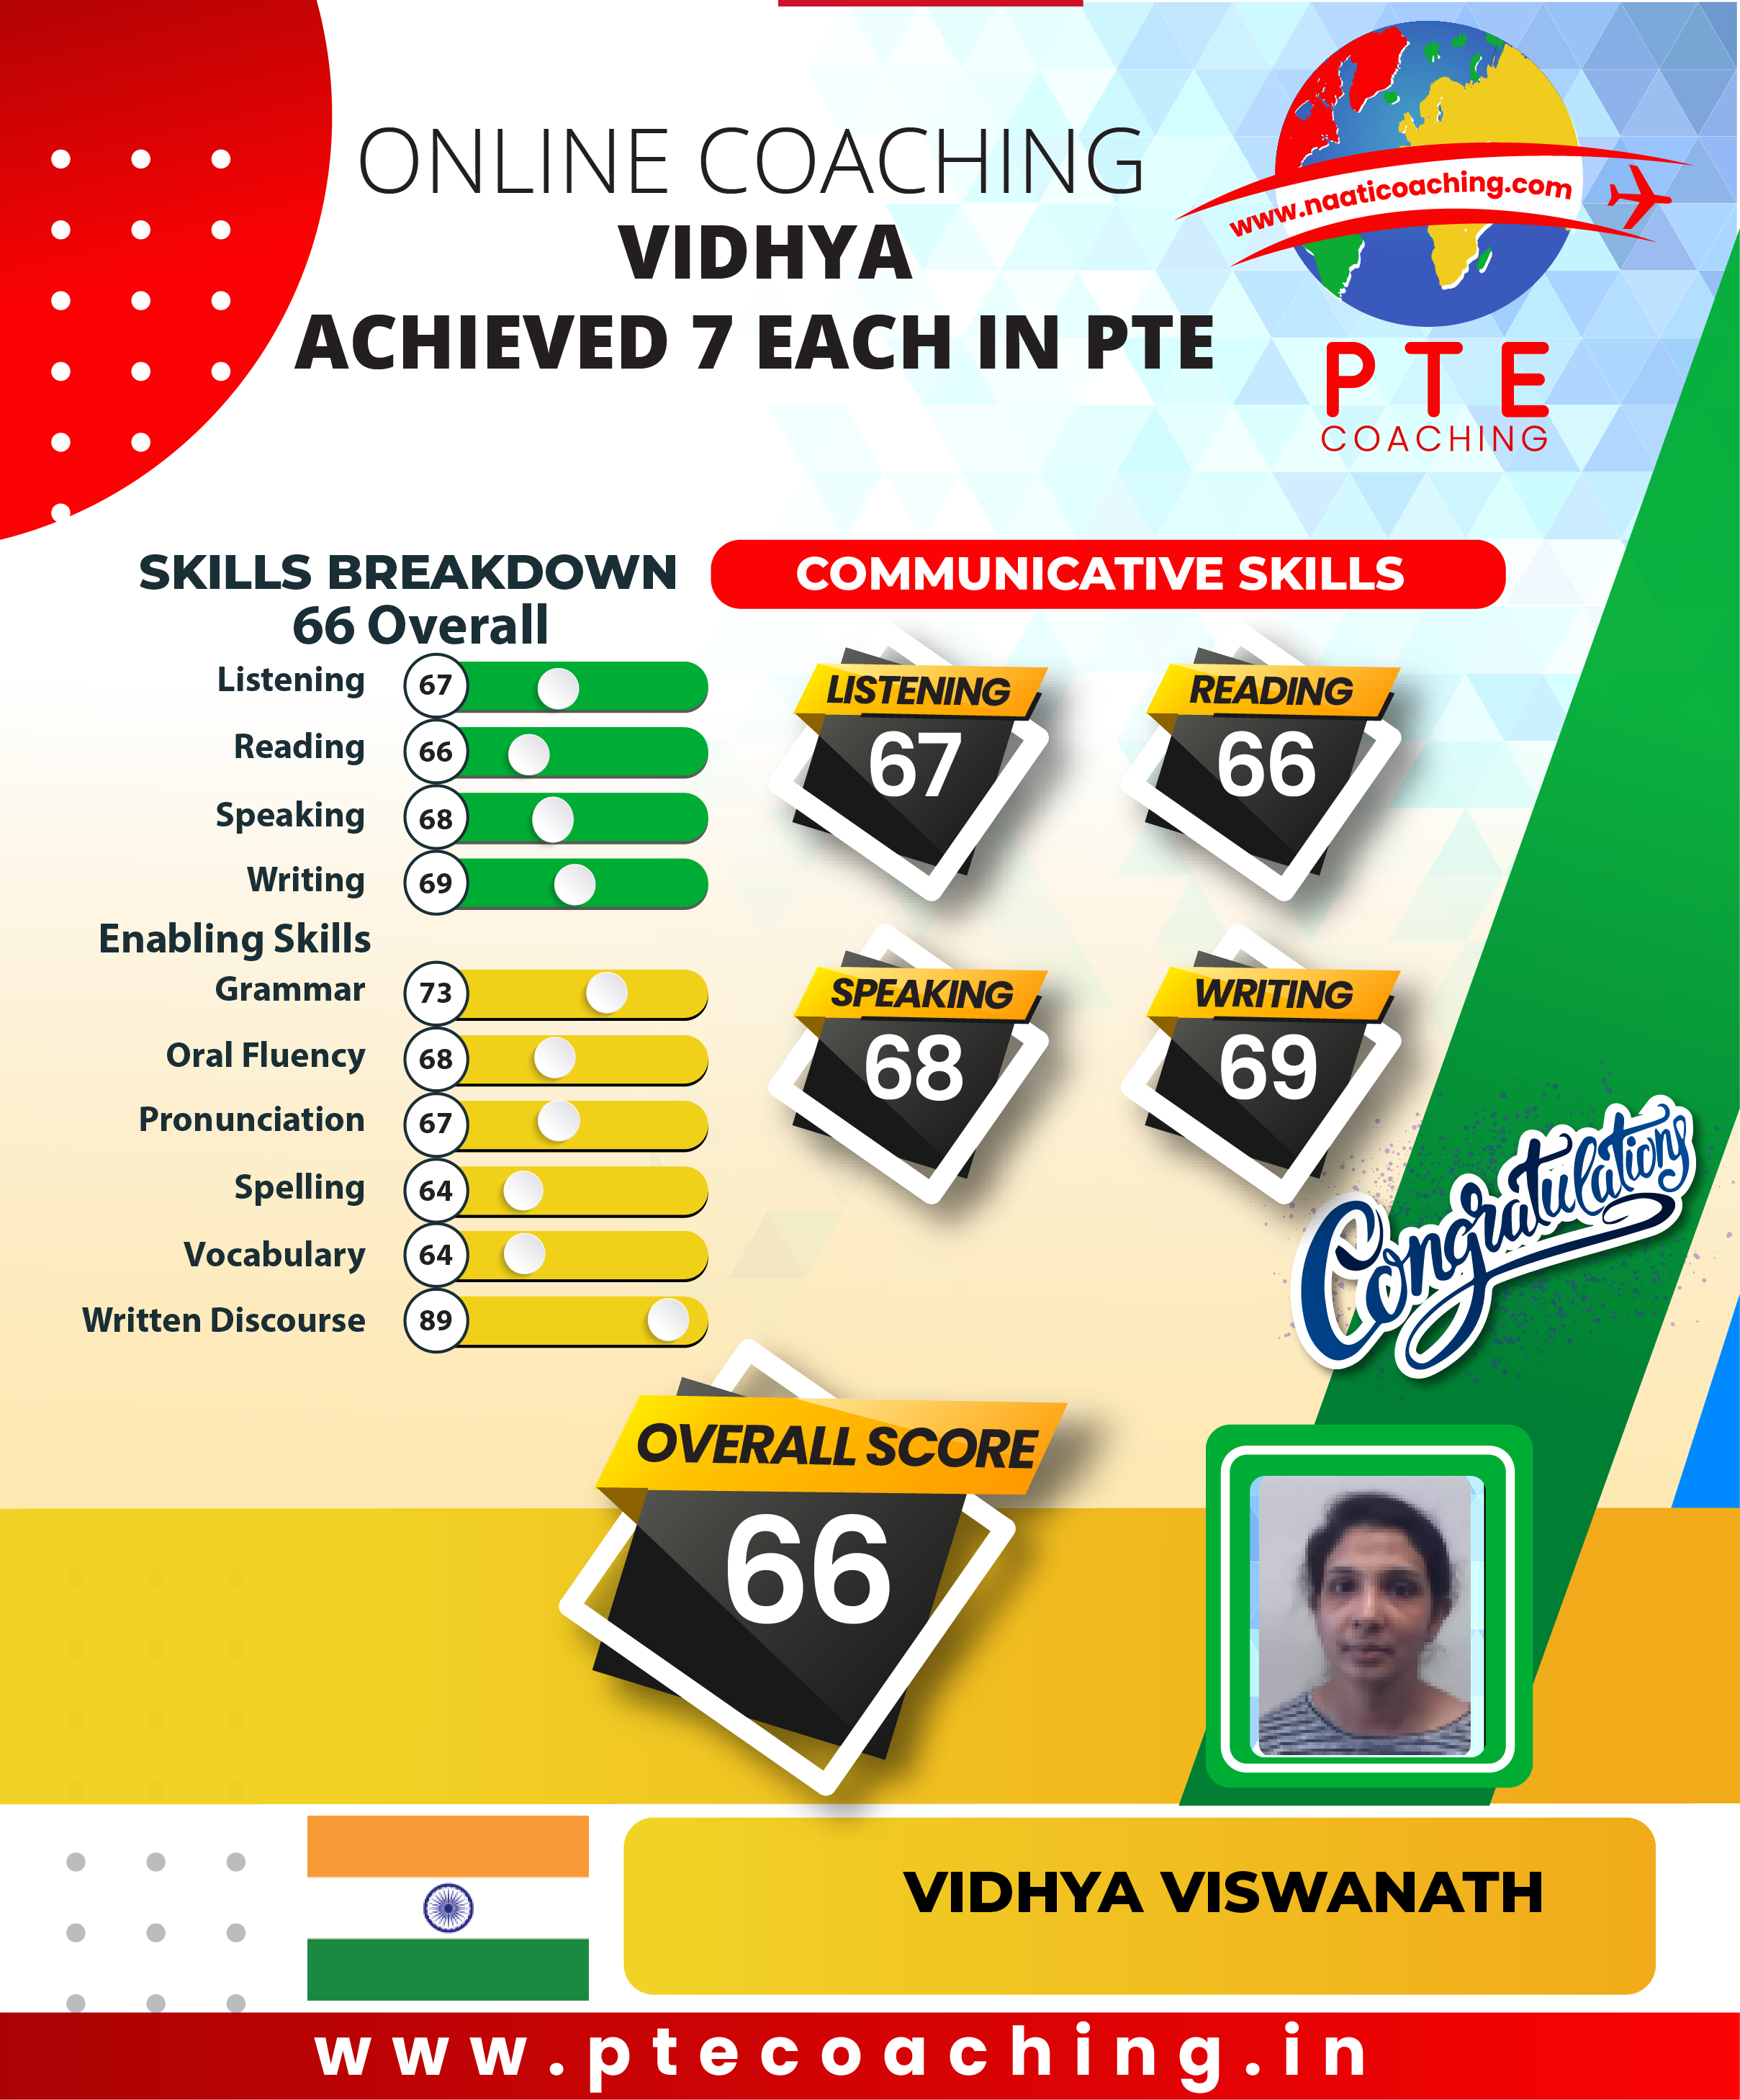 PTE Coaching Scorecard - Vidhya achieved 7 each in PTE